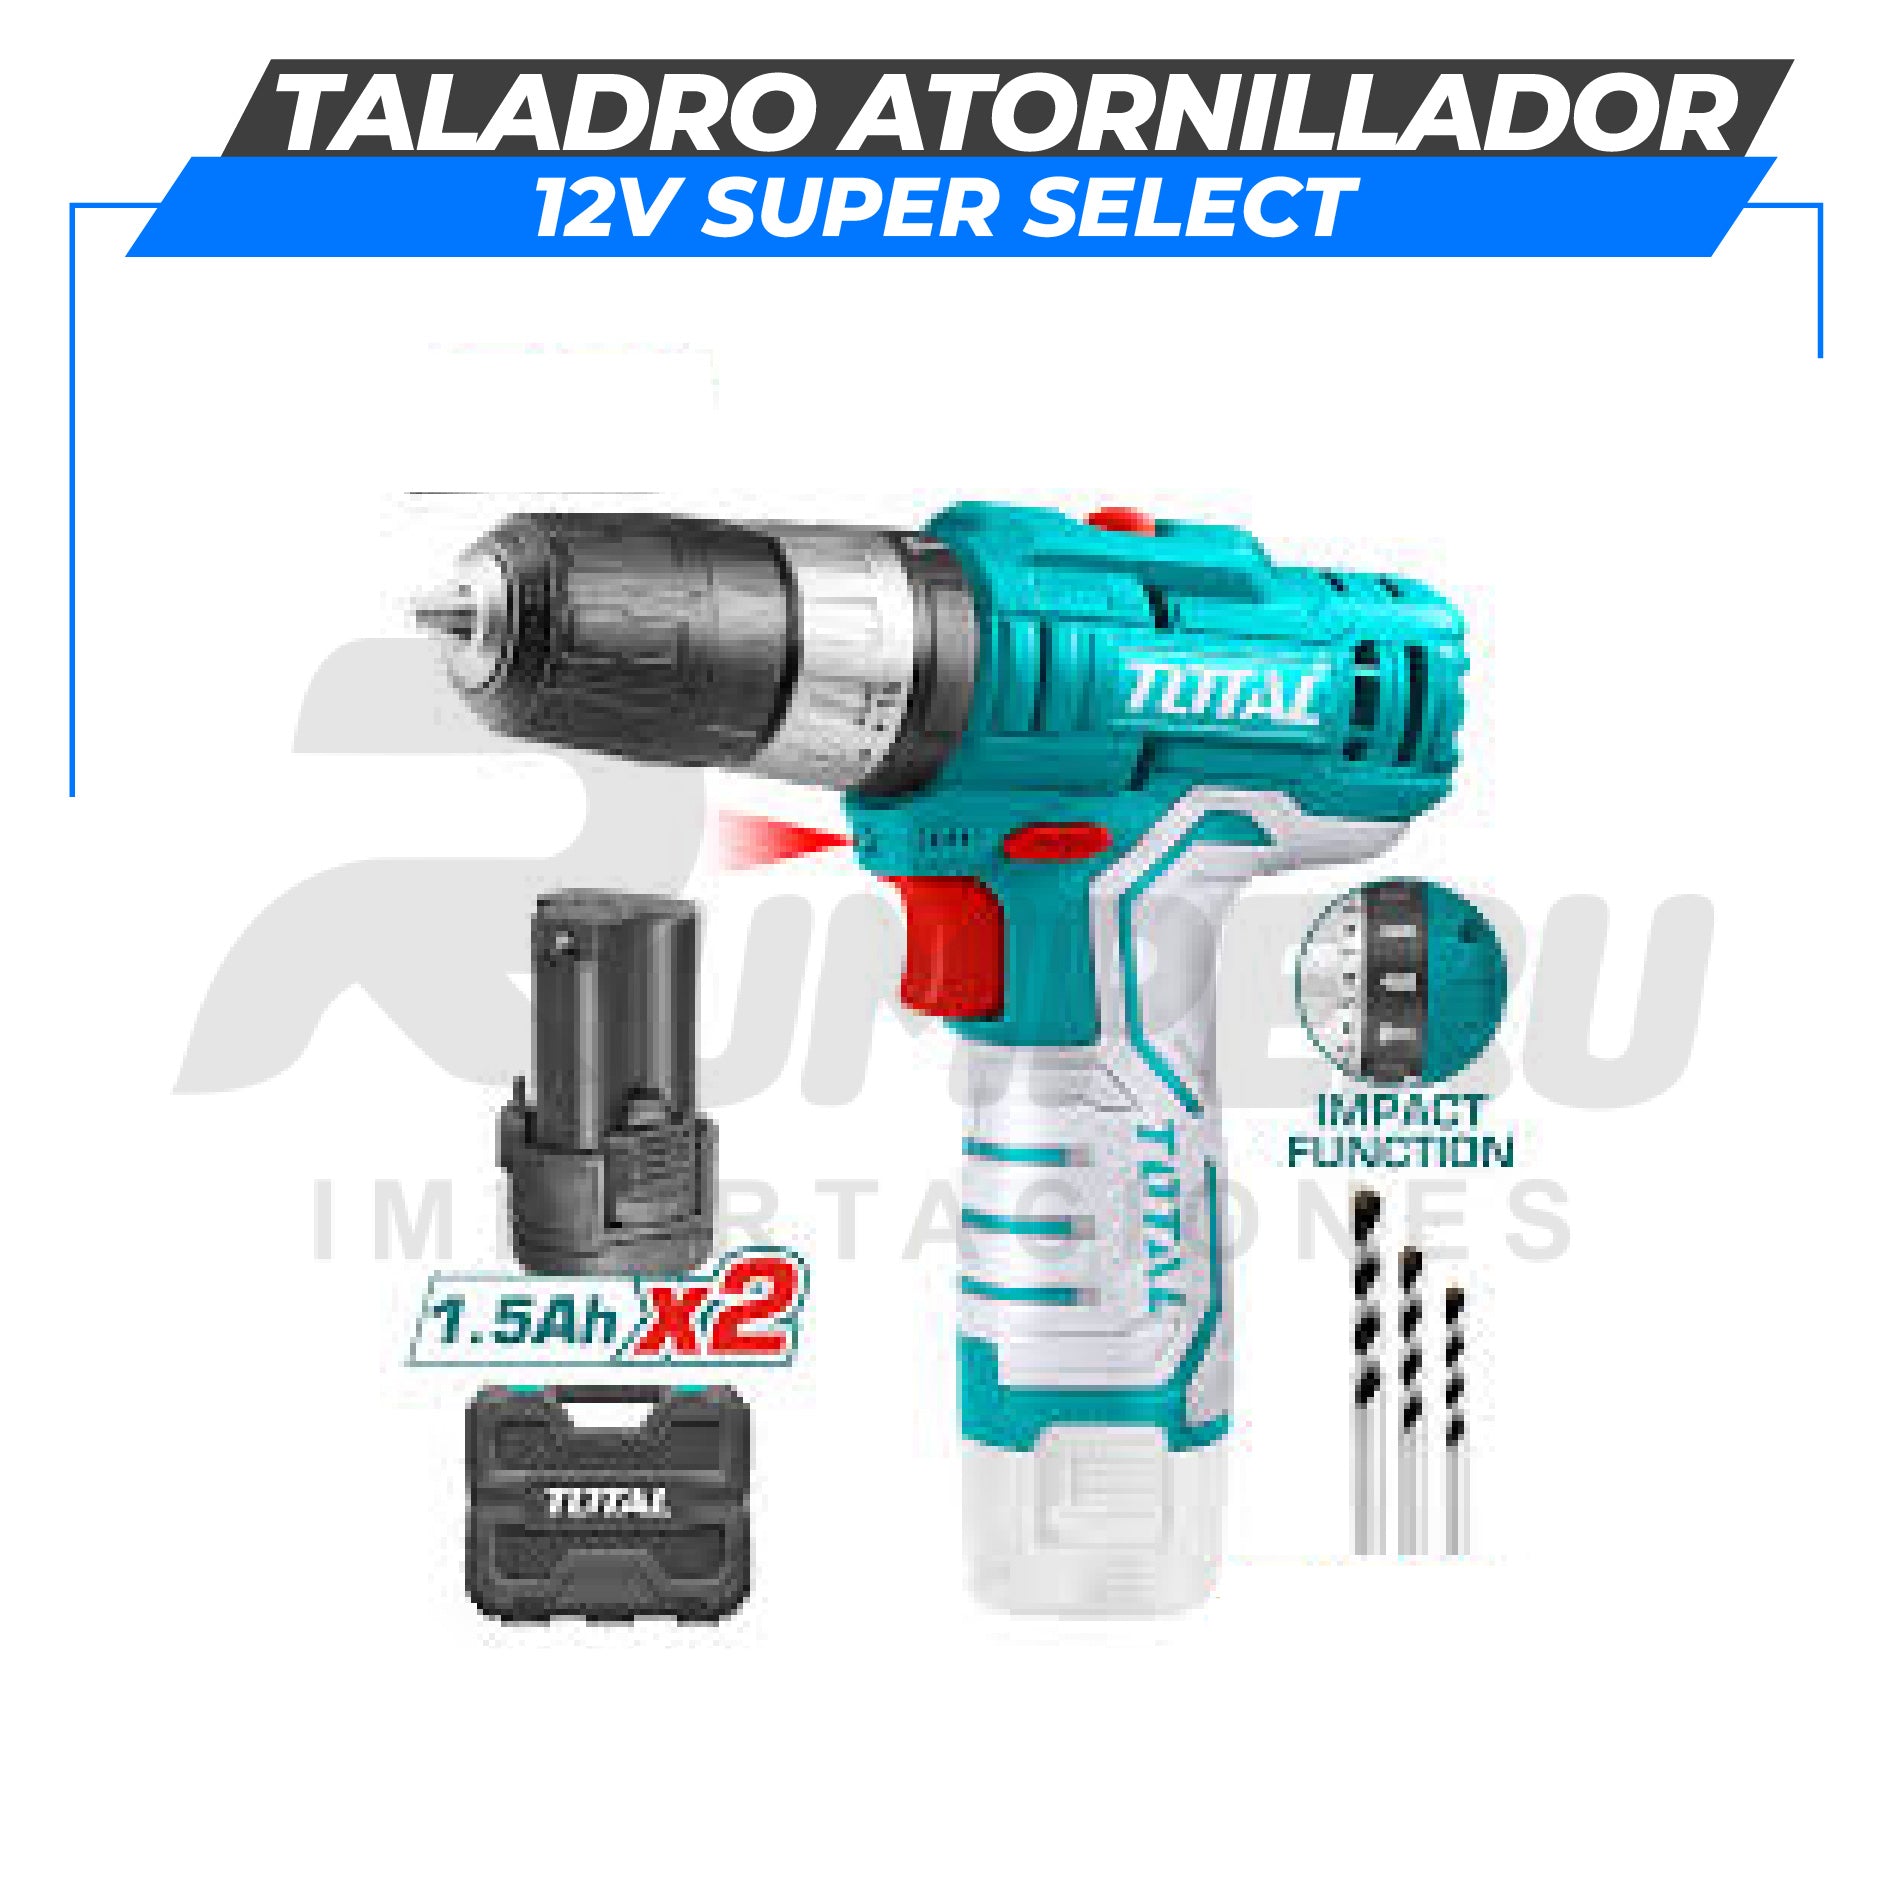 Taladro atornillador 12v super select